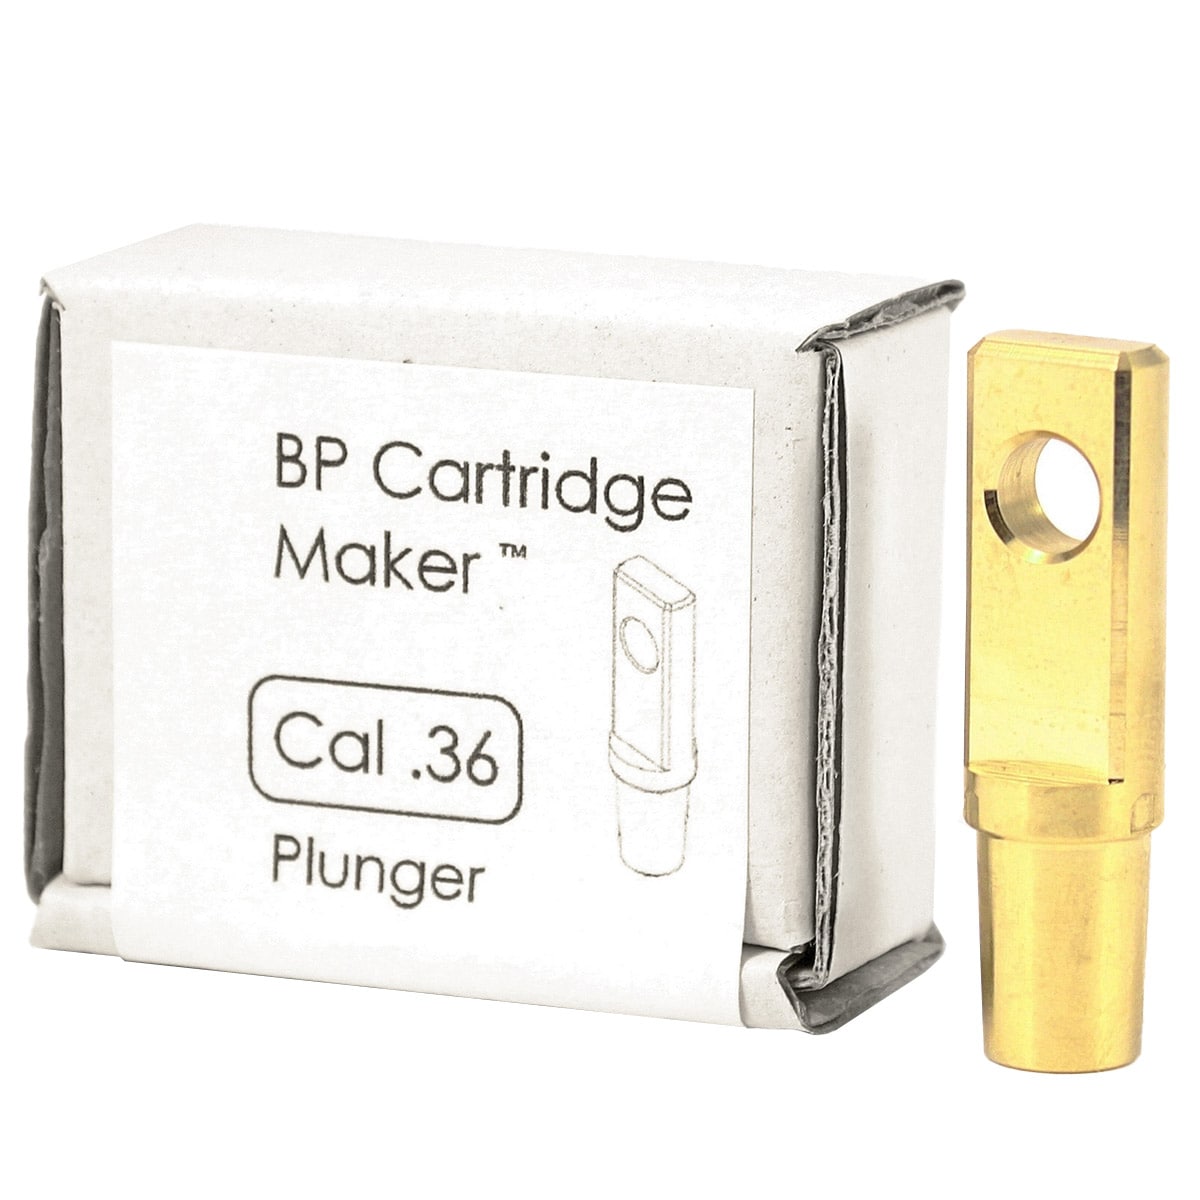 Tłoczek do prasy BP Cartridge Maker - kaliber .36